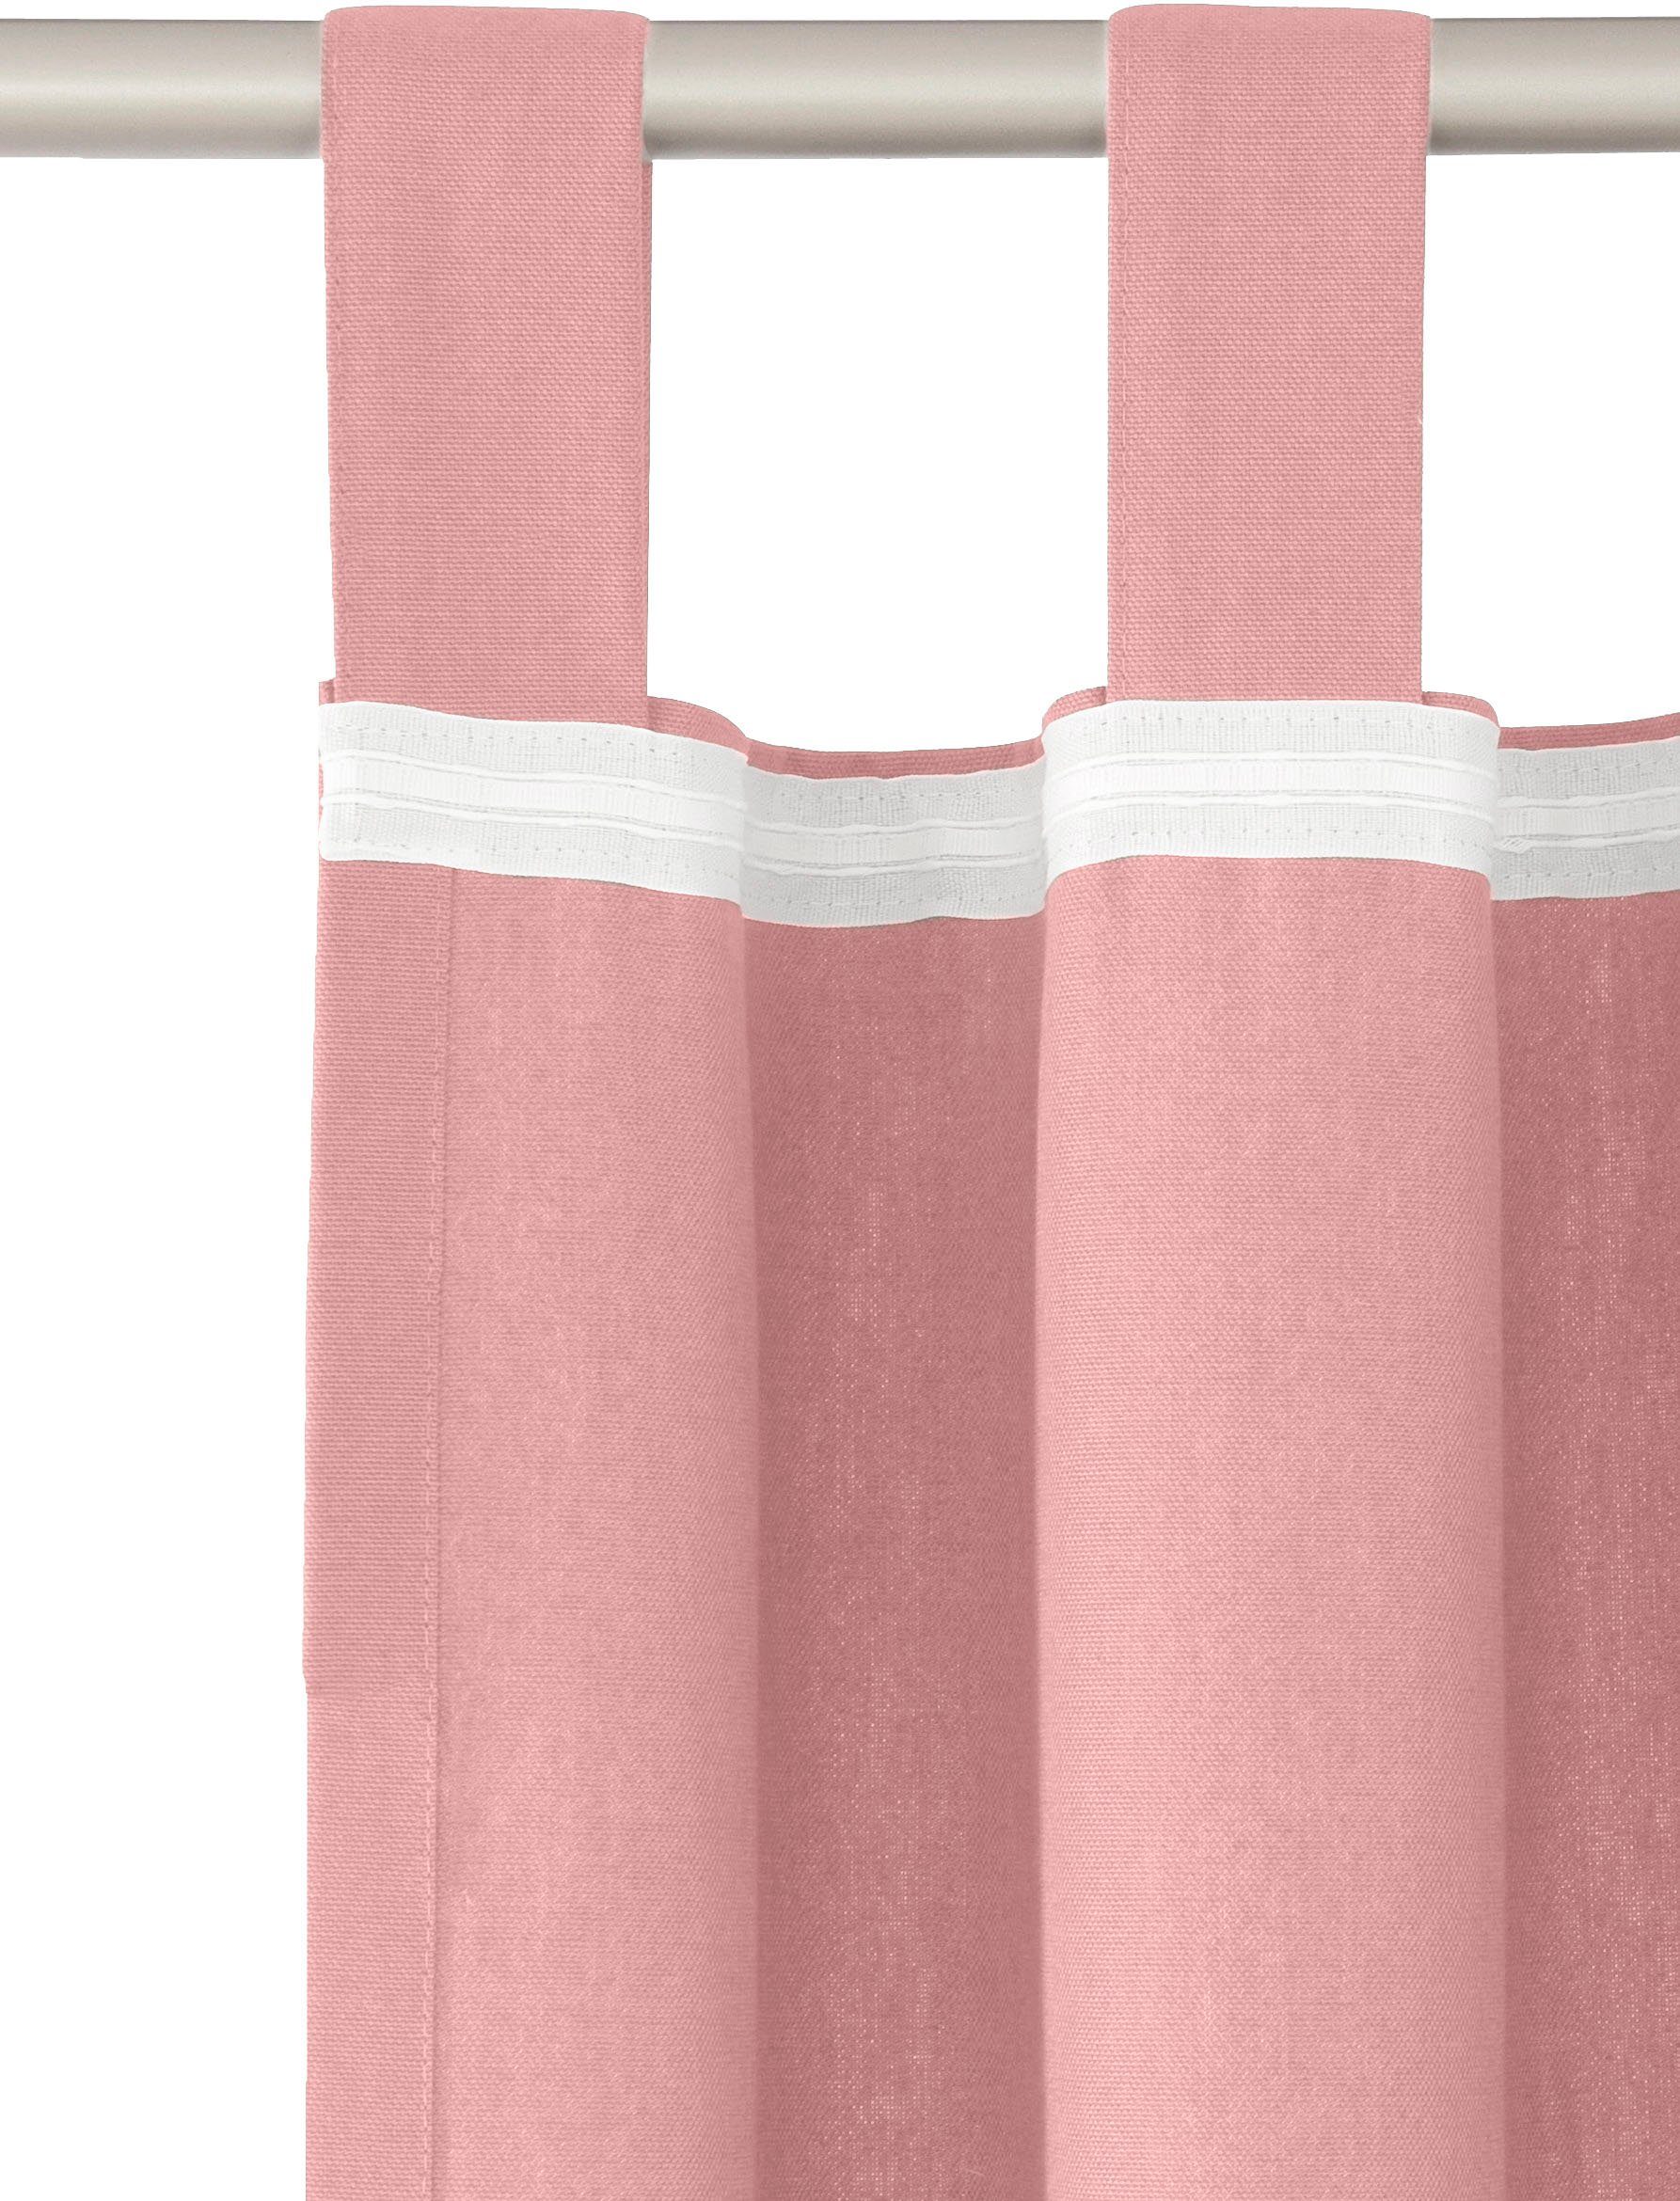 blickdicht rosé (1 TAILOR blickdicht, Schlaufen Dove, TOM HOME, St), Vorhang